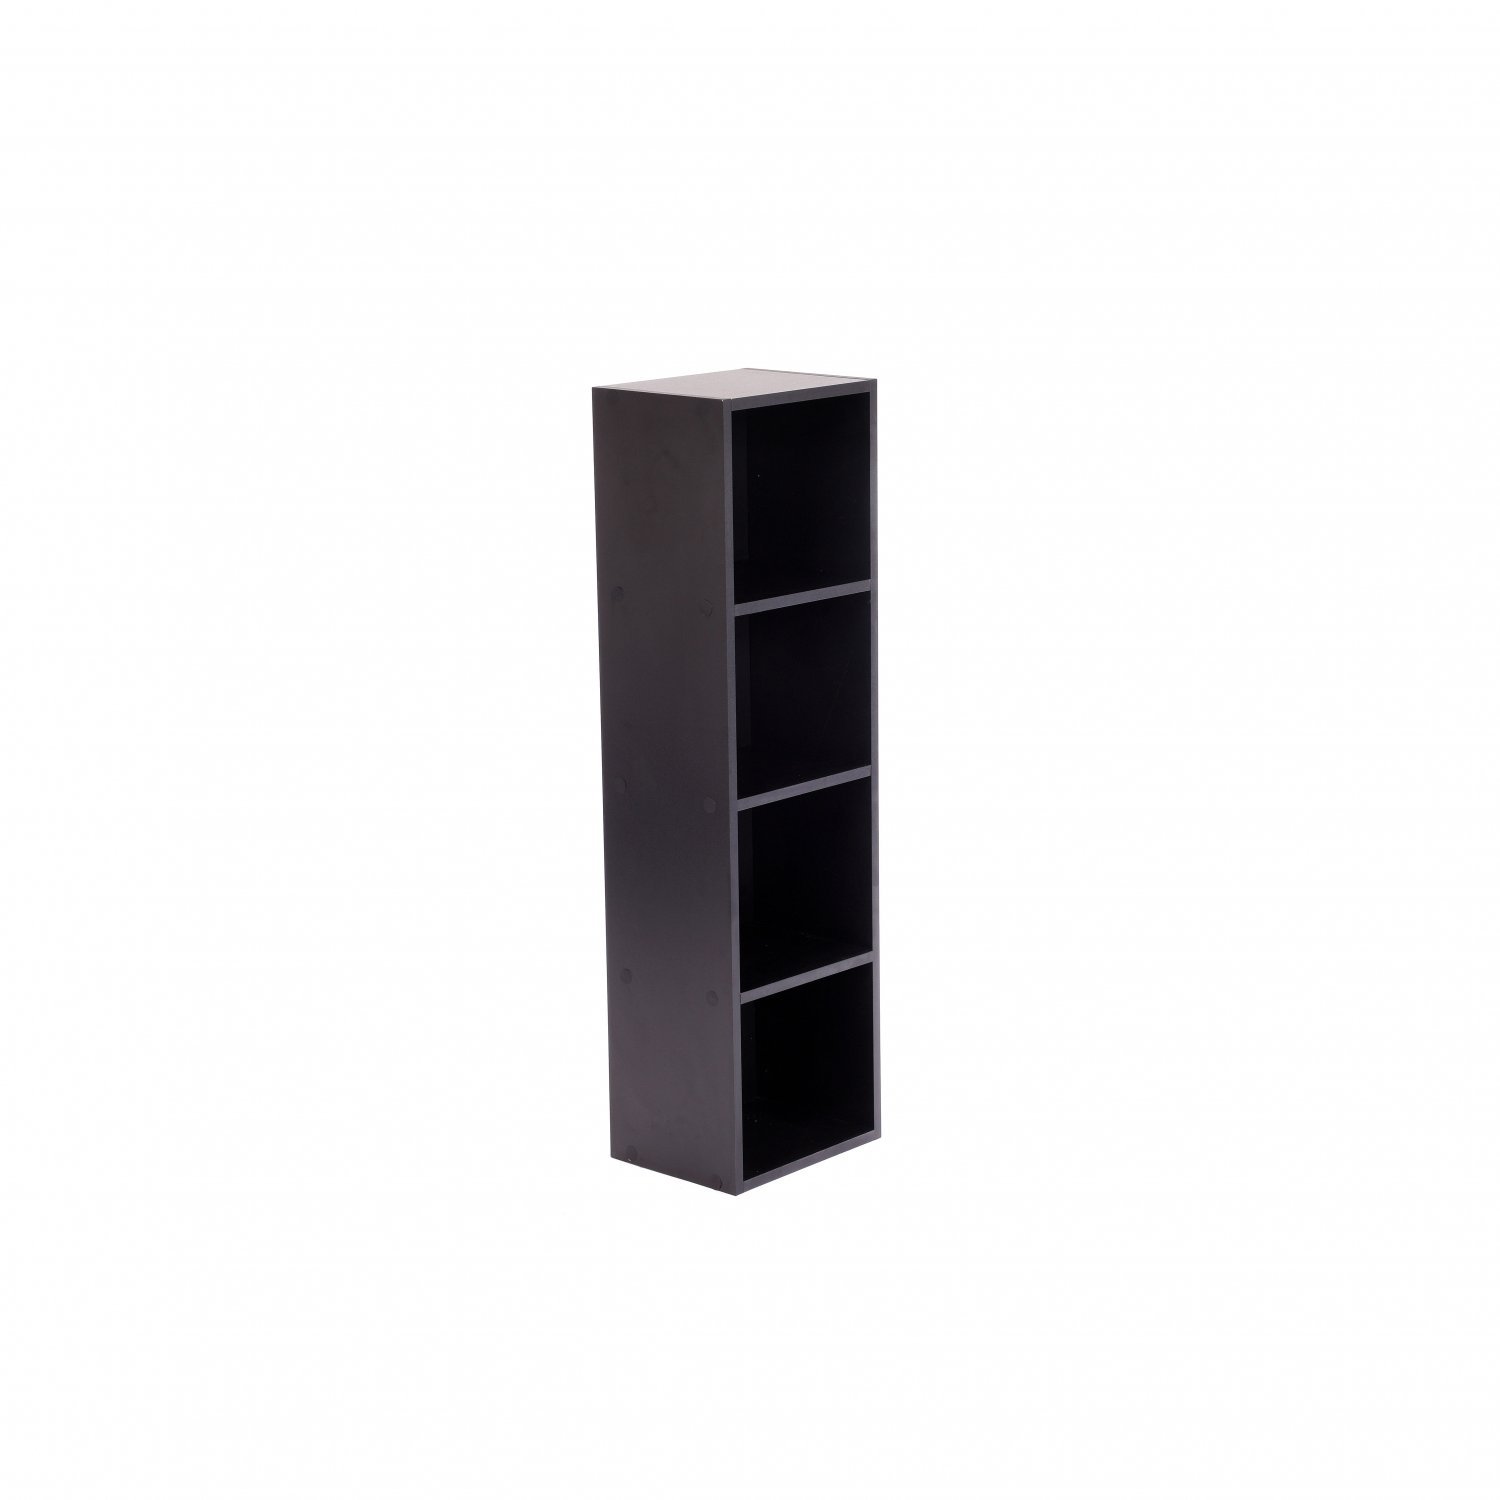 4 Tier Wooden Shelf Black Bookcase Shelving Storage Display Rack